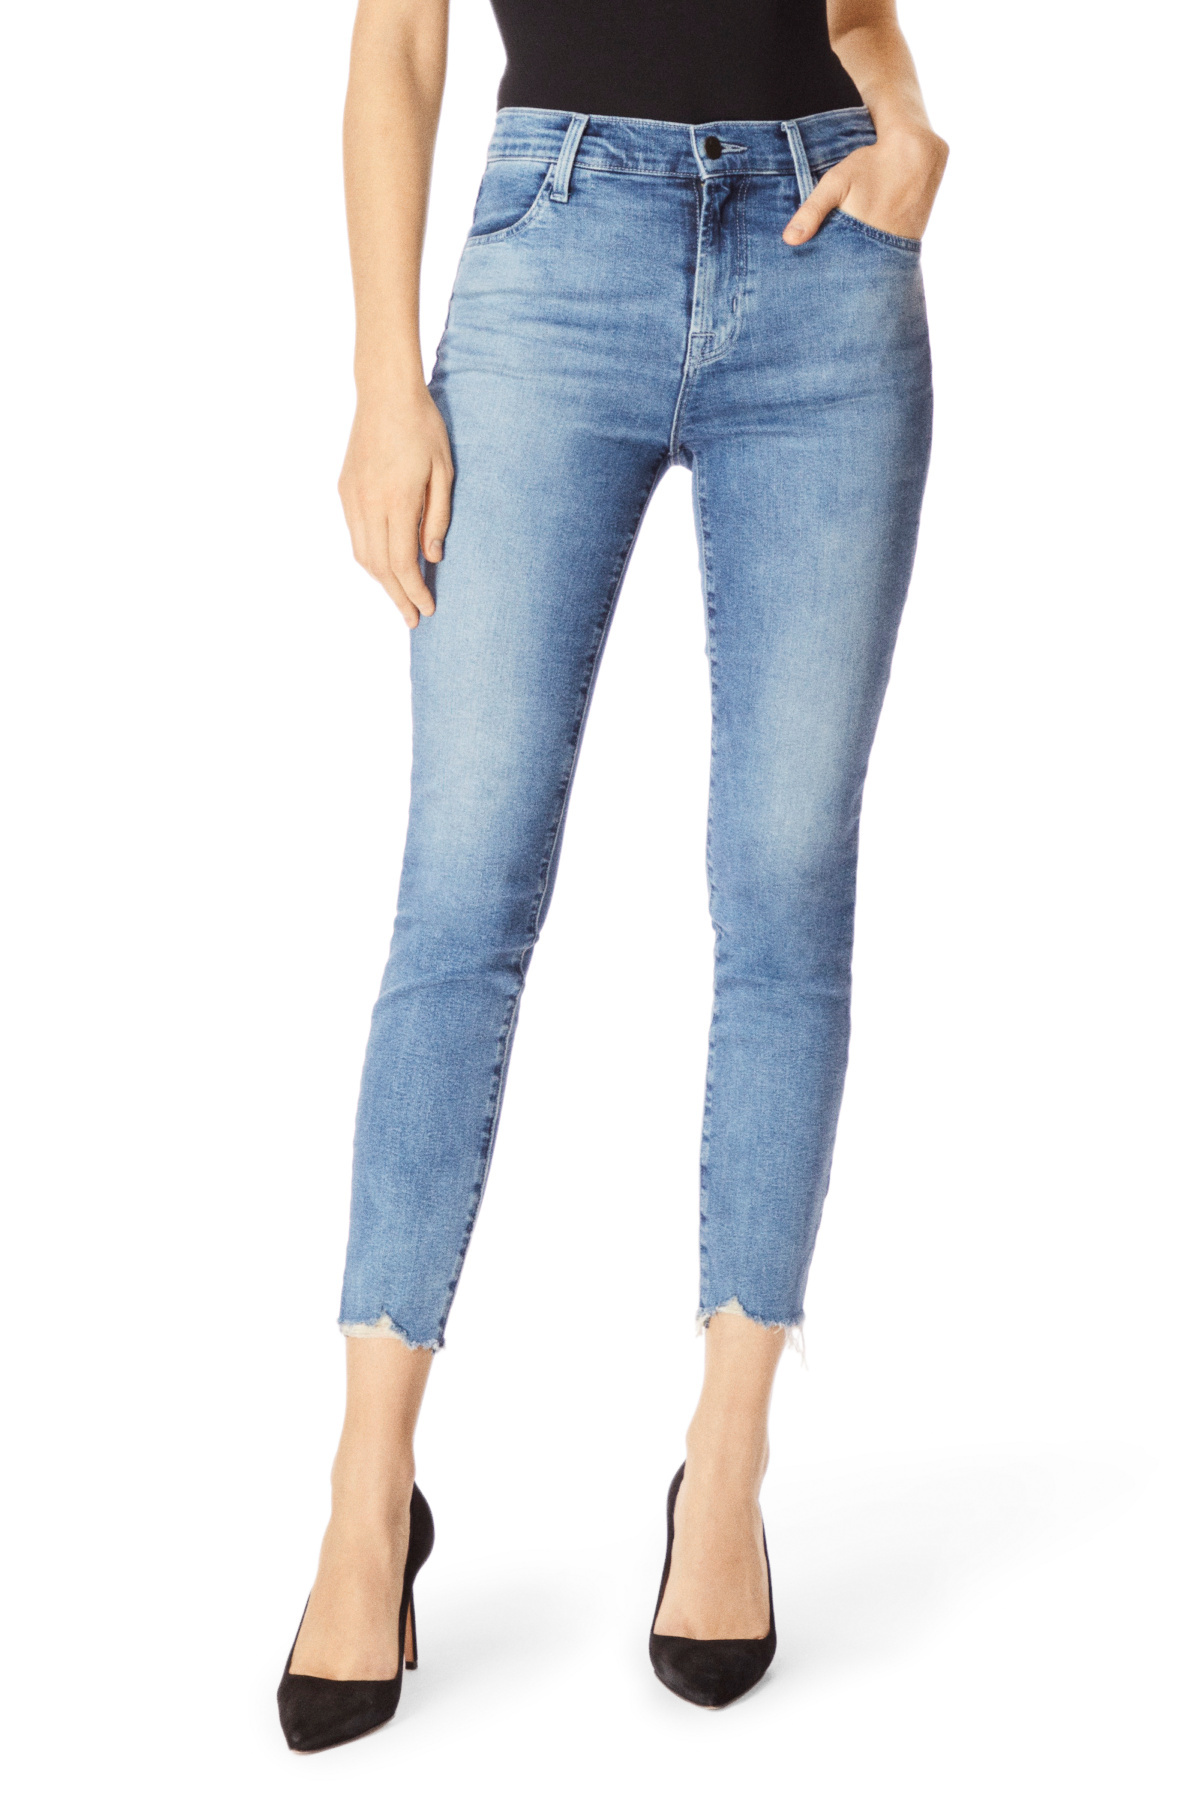 J Brand Jeans Alana High Rise Crop Skinny in Epsilon